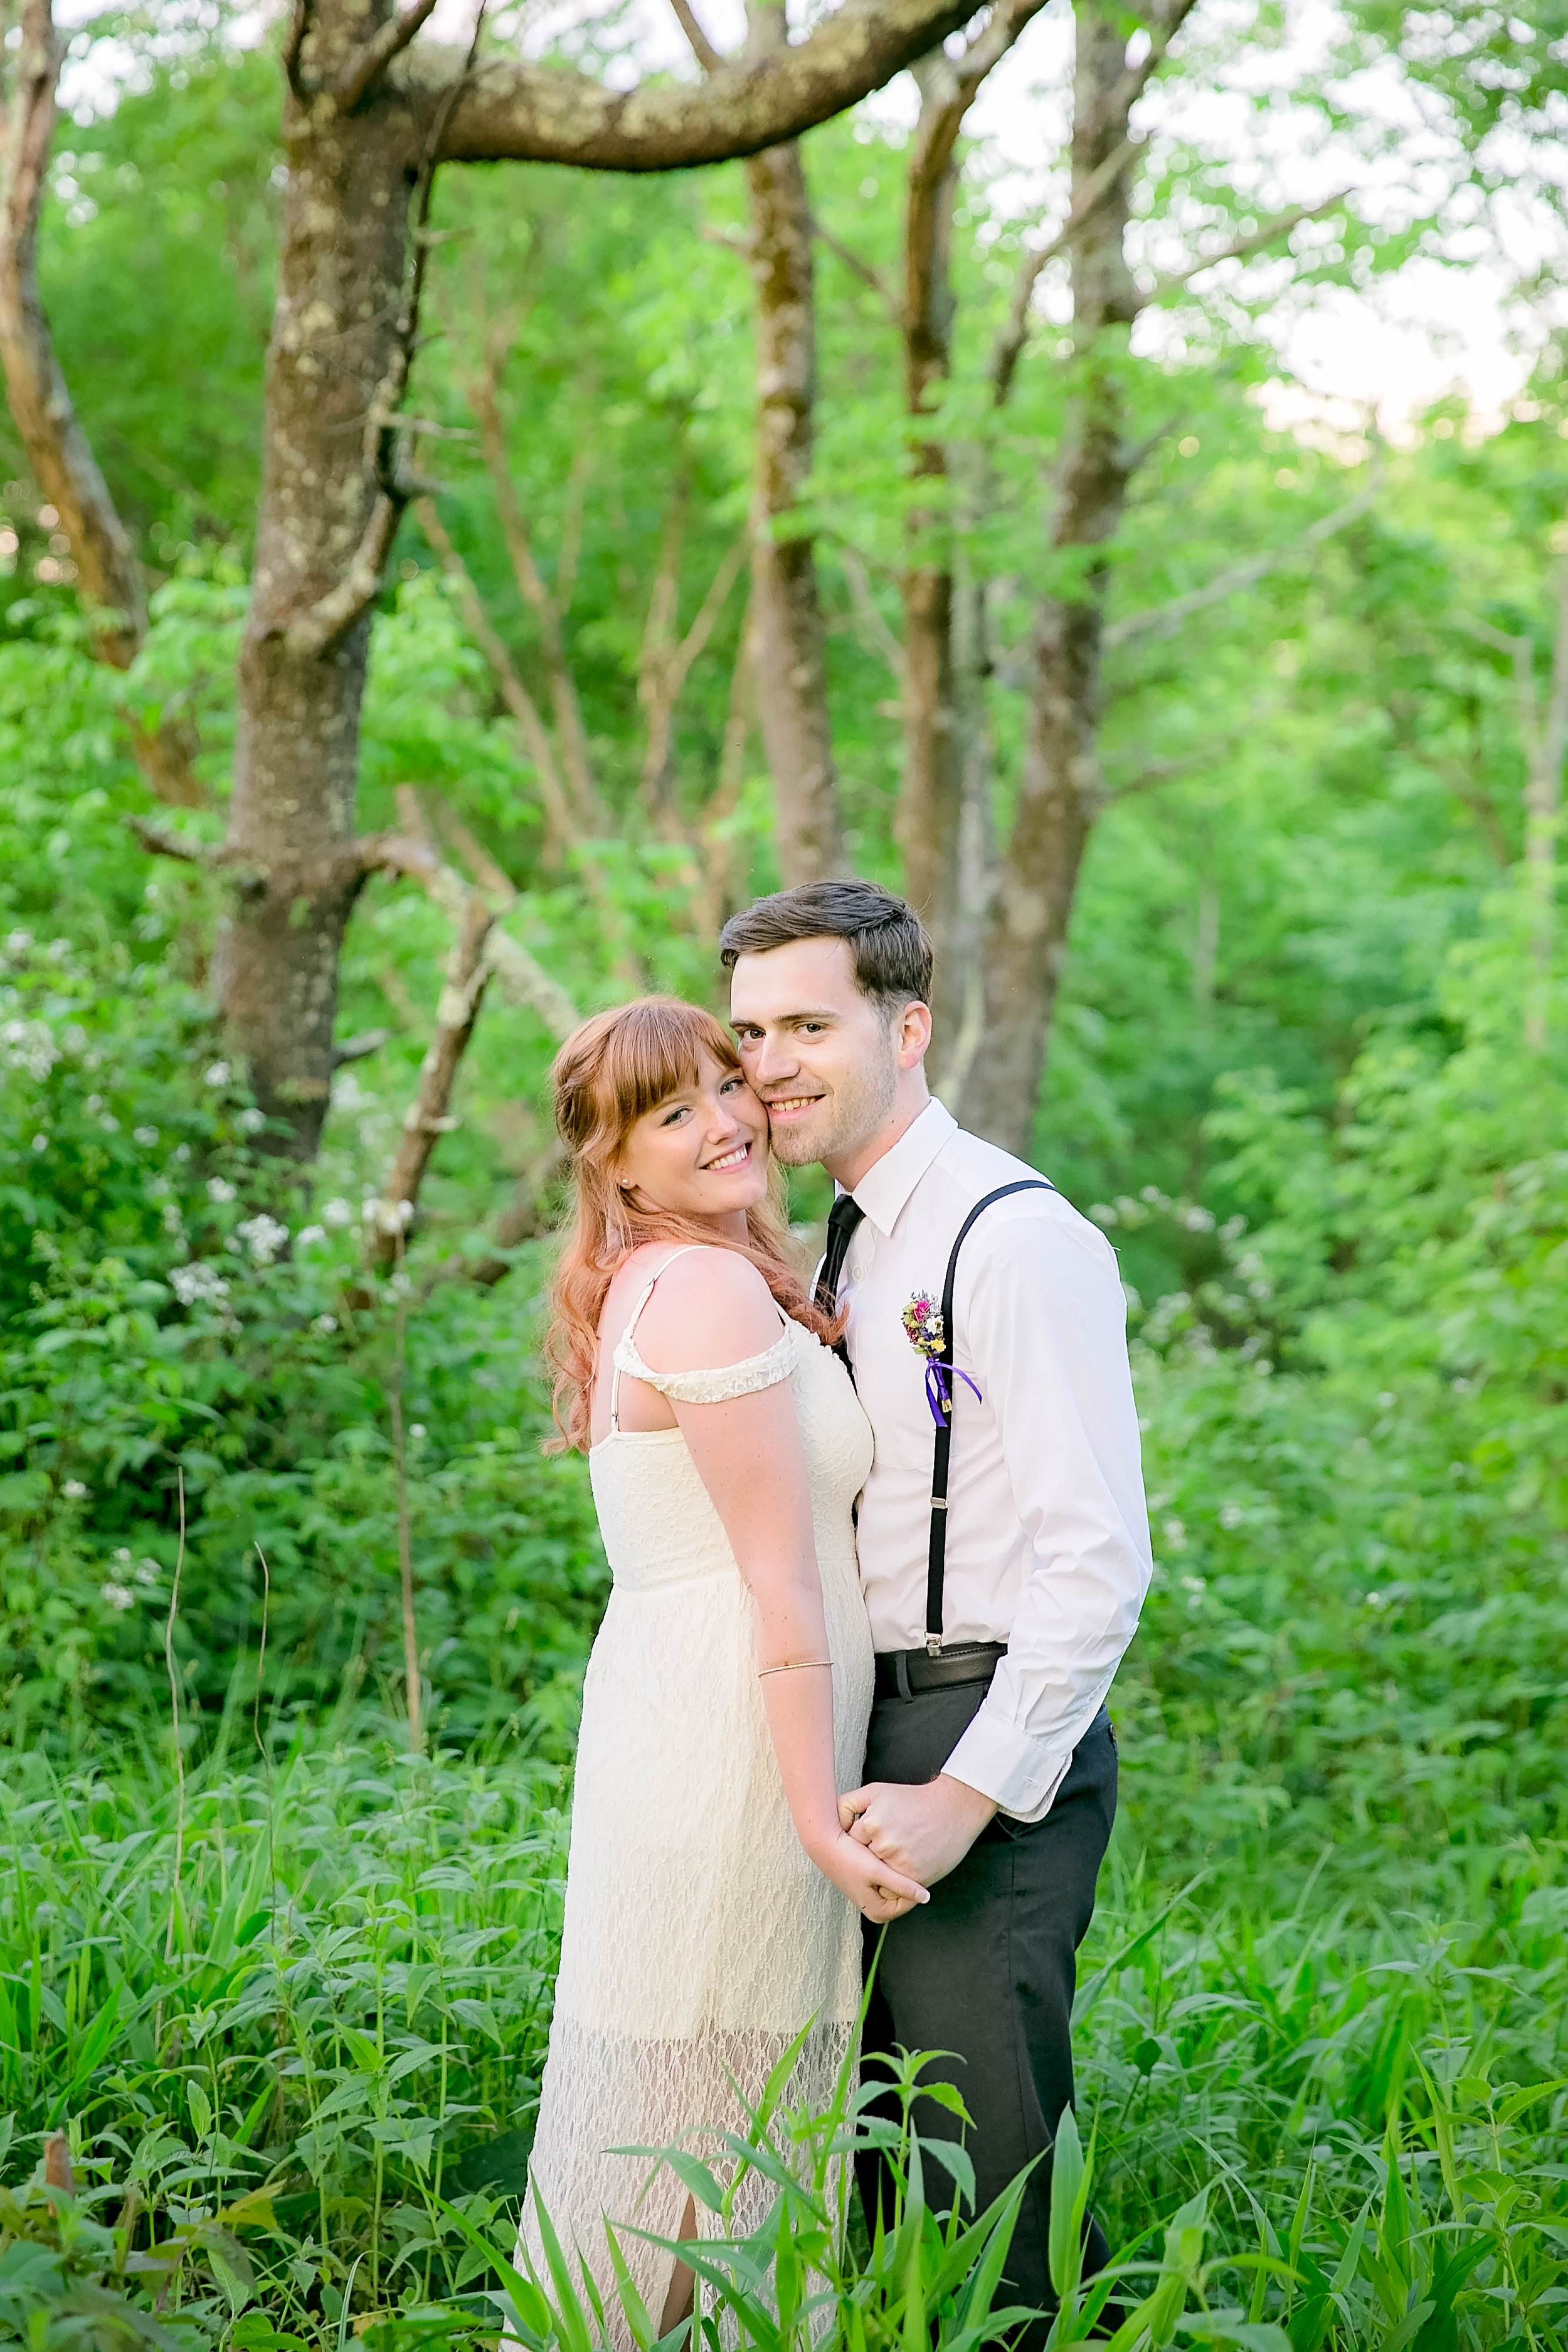 Beauty Spot Roan Mountain wedding, Appalachian Trail engagement, East Tennessee wedding photography, East Tennessee mountain wedding, bride and groom portrait